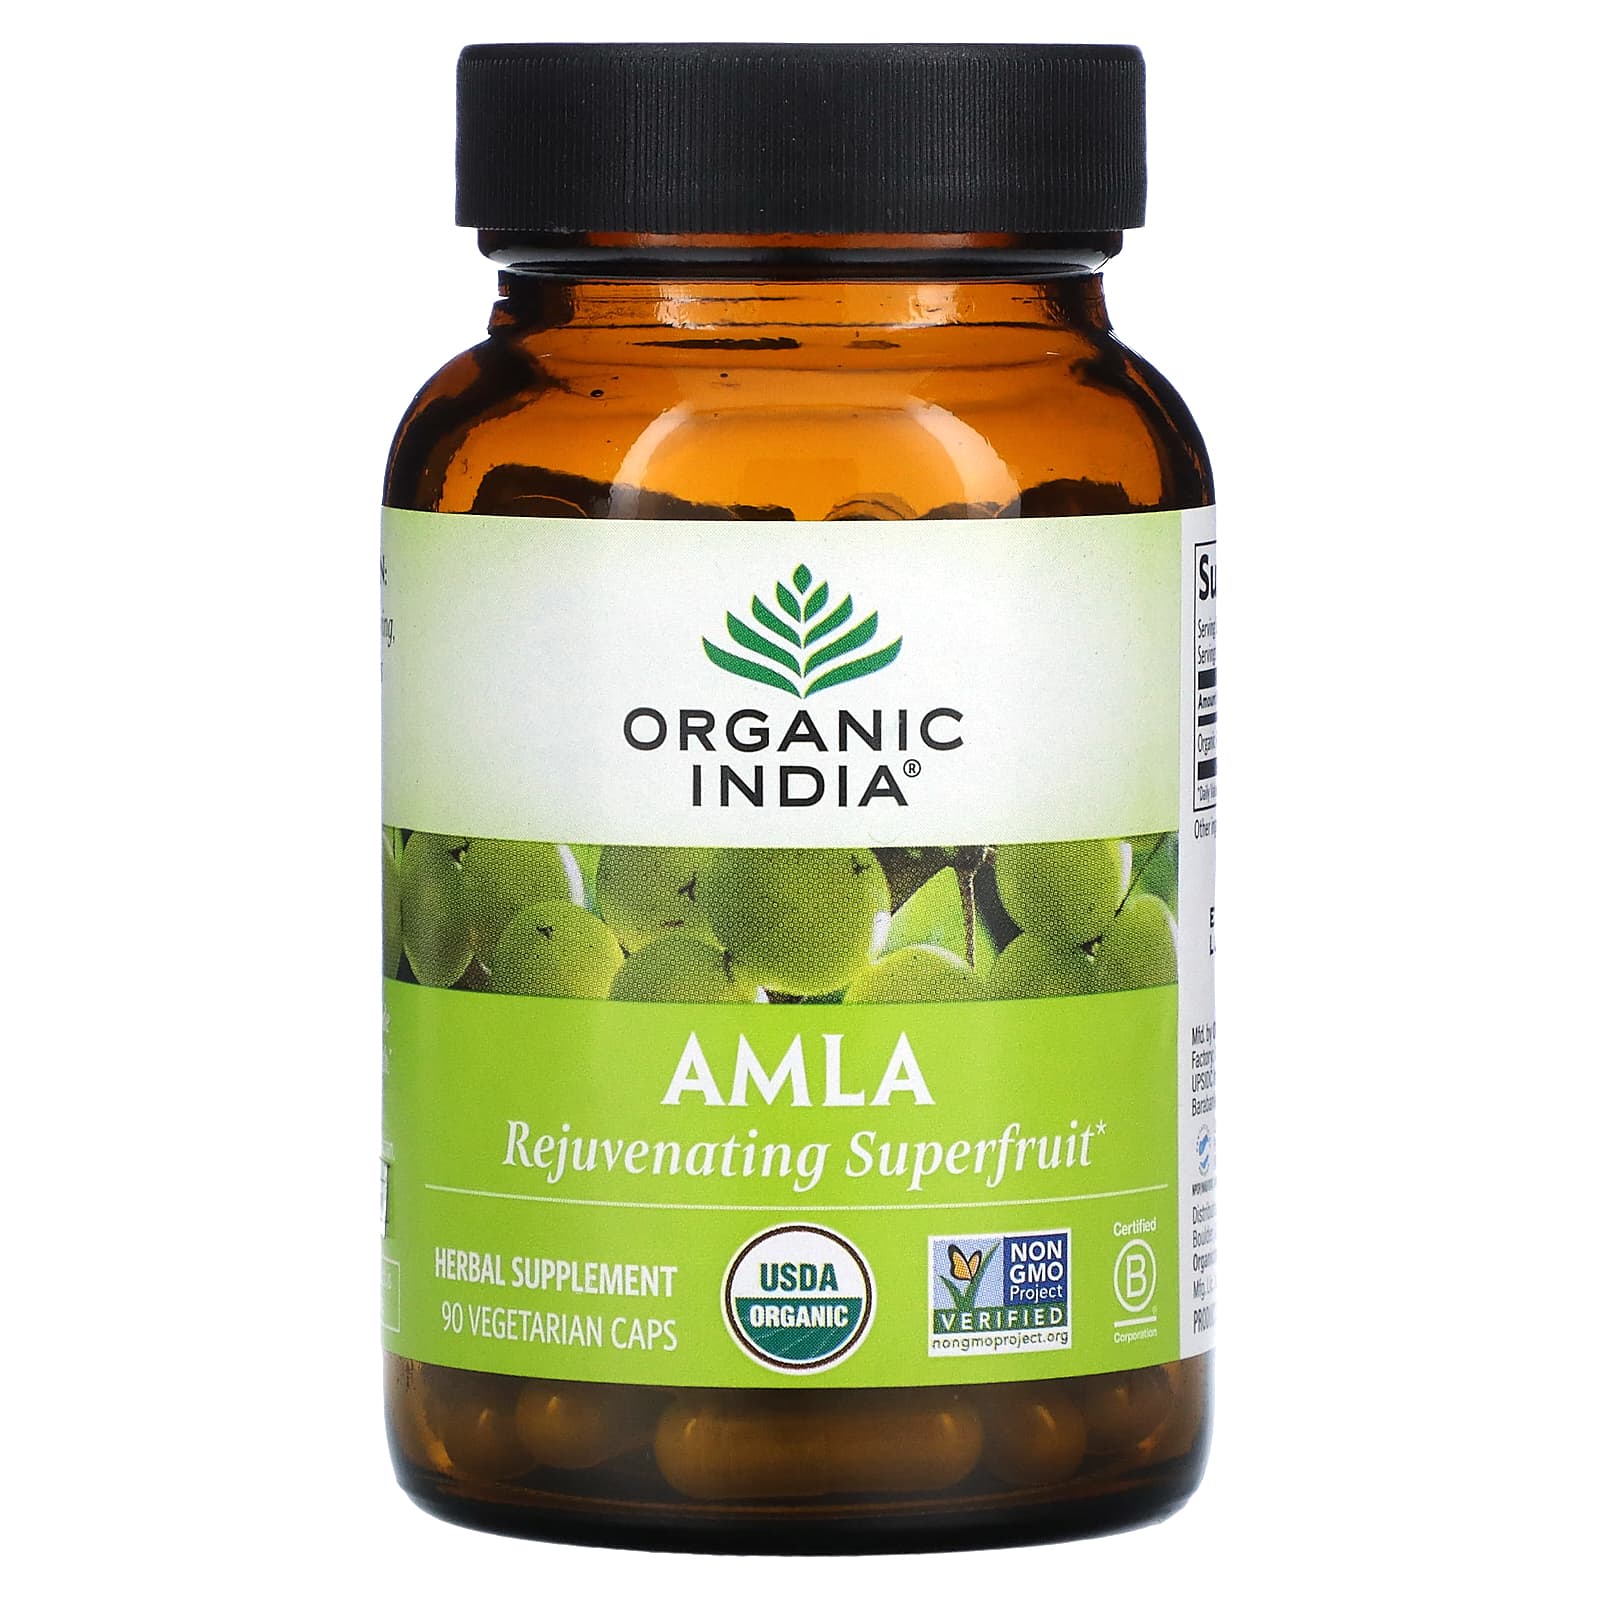 Organic India Amla 90 Vegetarian Caps цена и фото